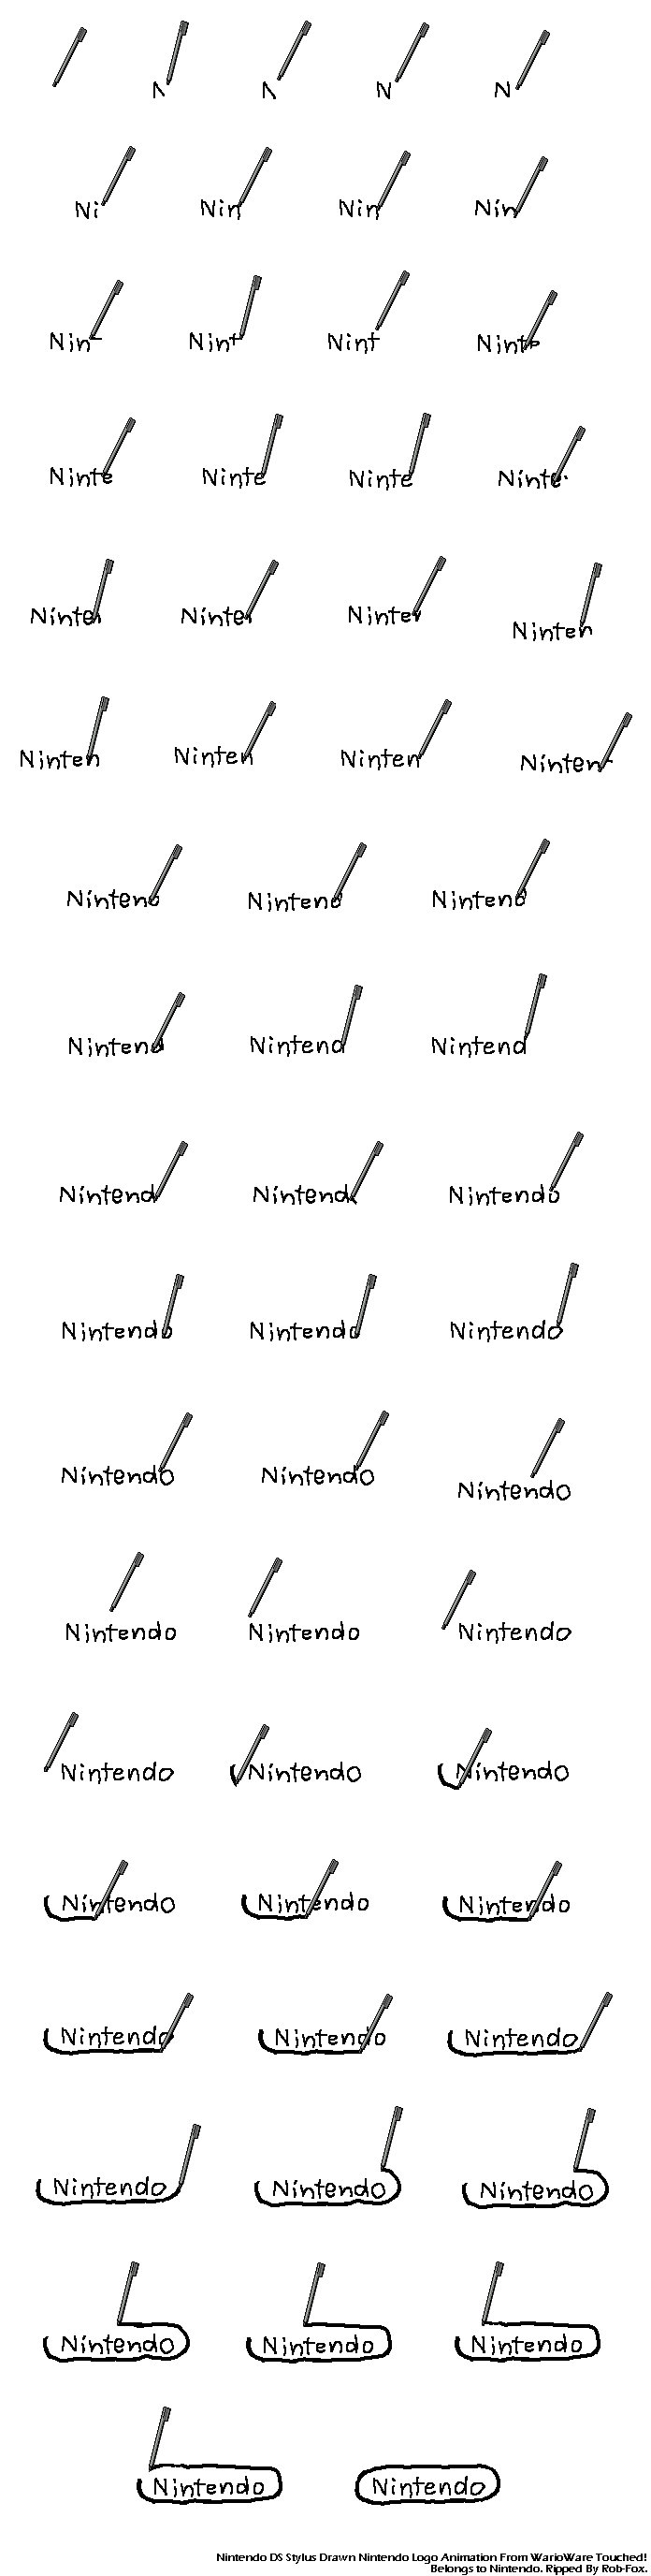 WarioWare: Touched! - Nintendo Logo